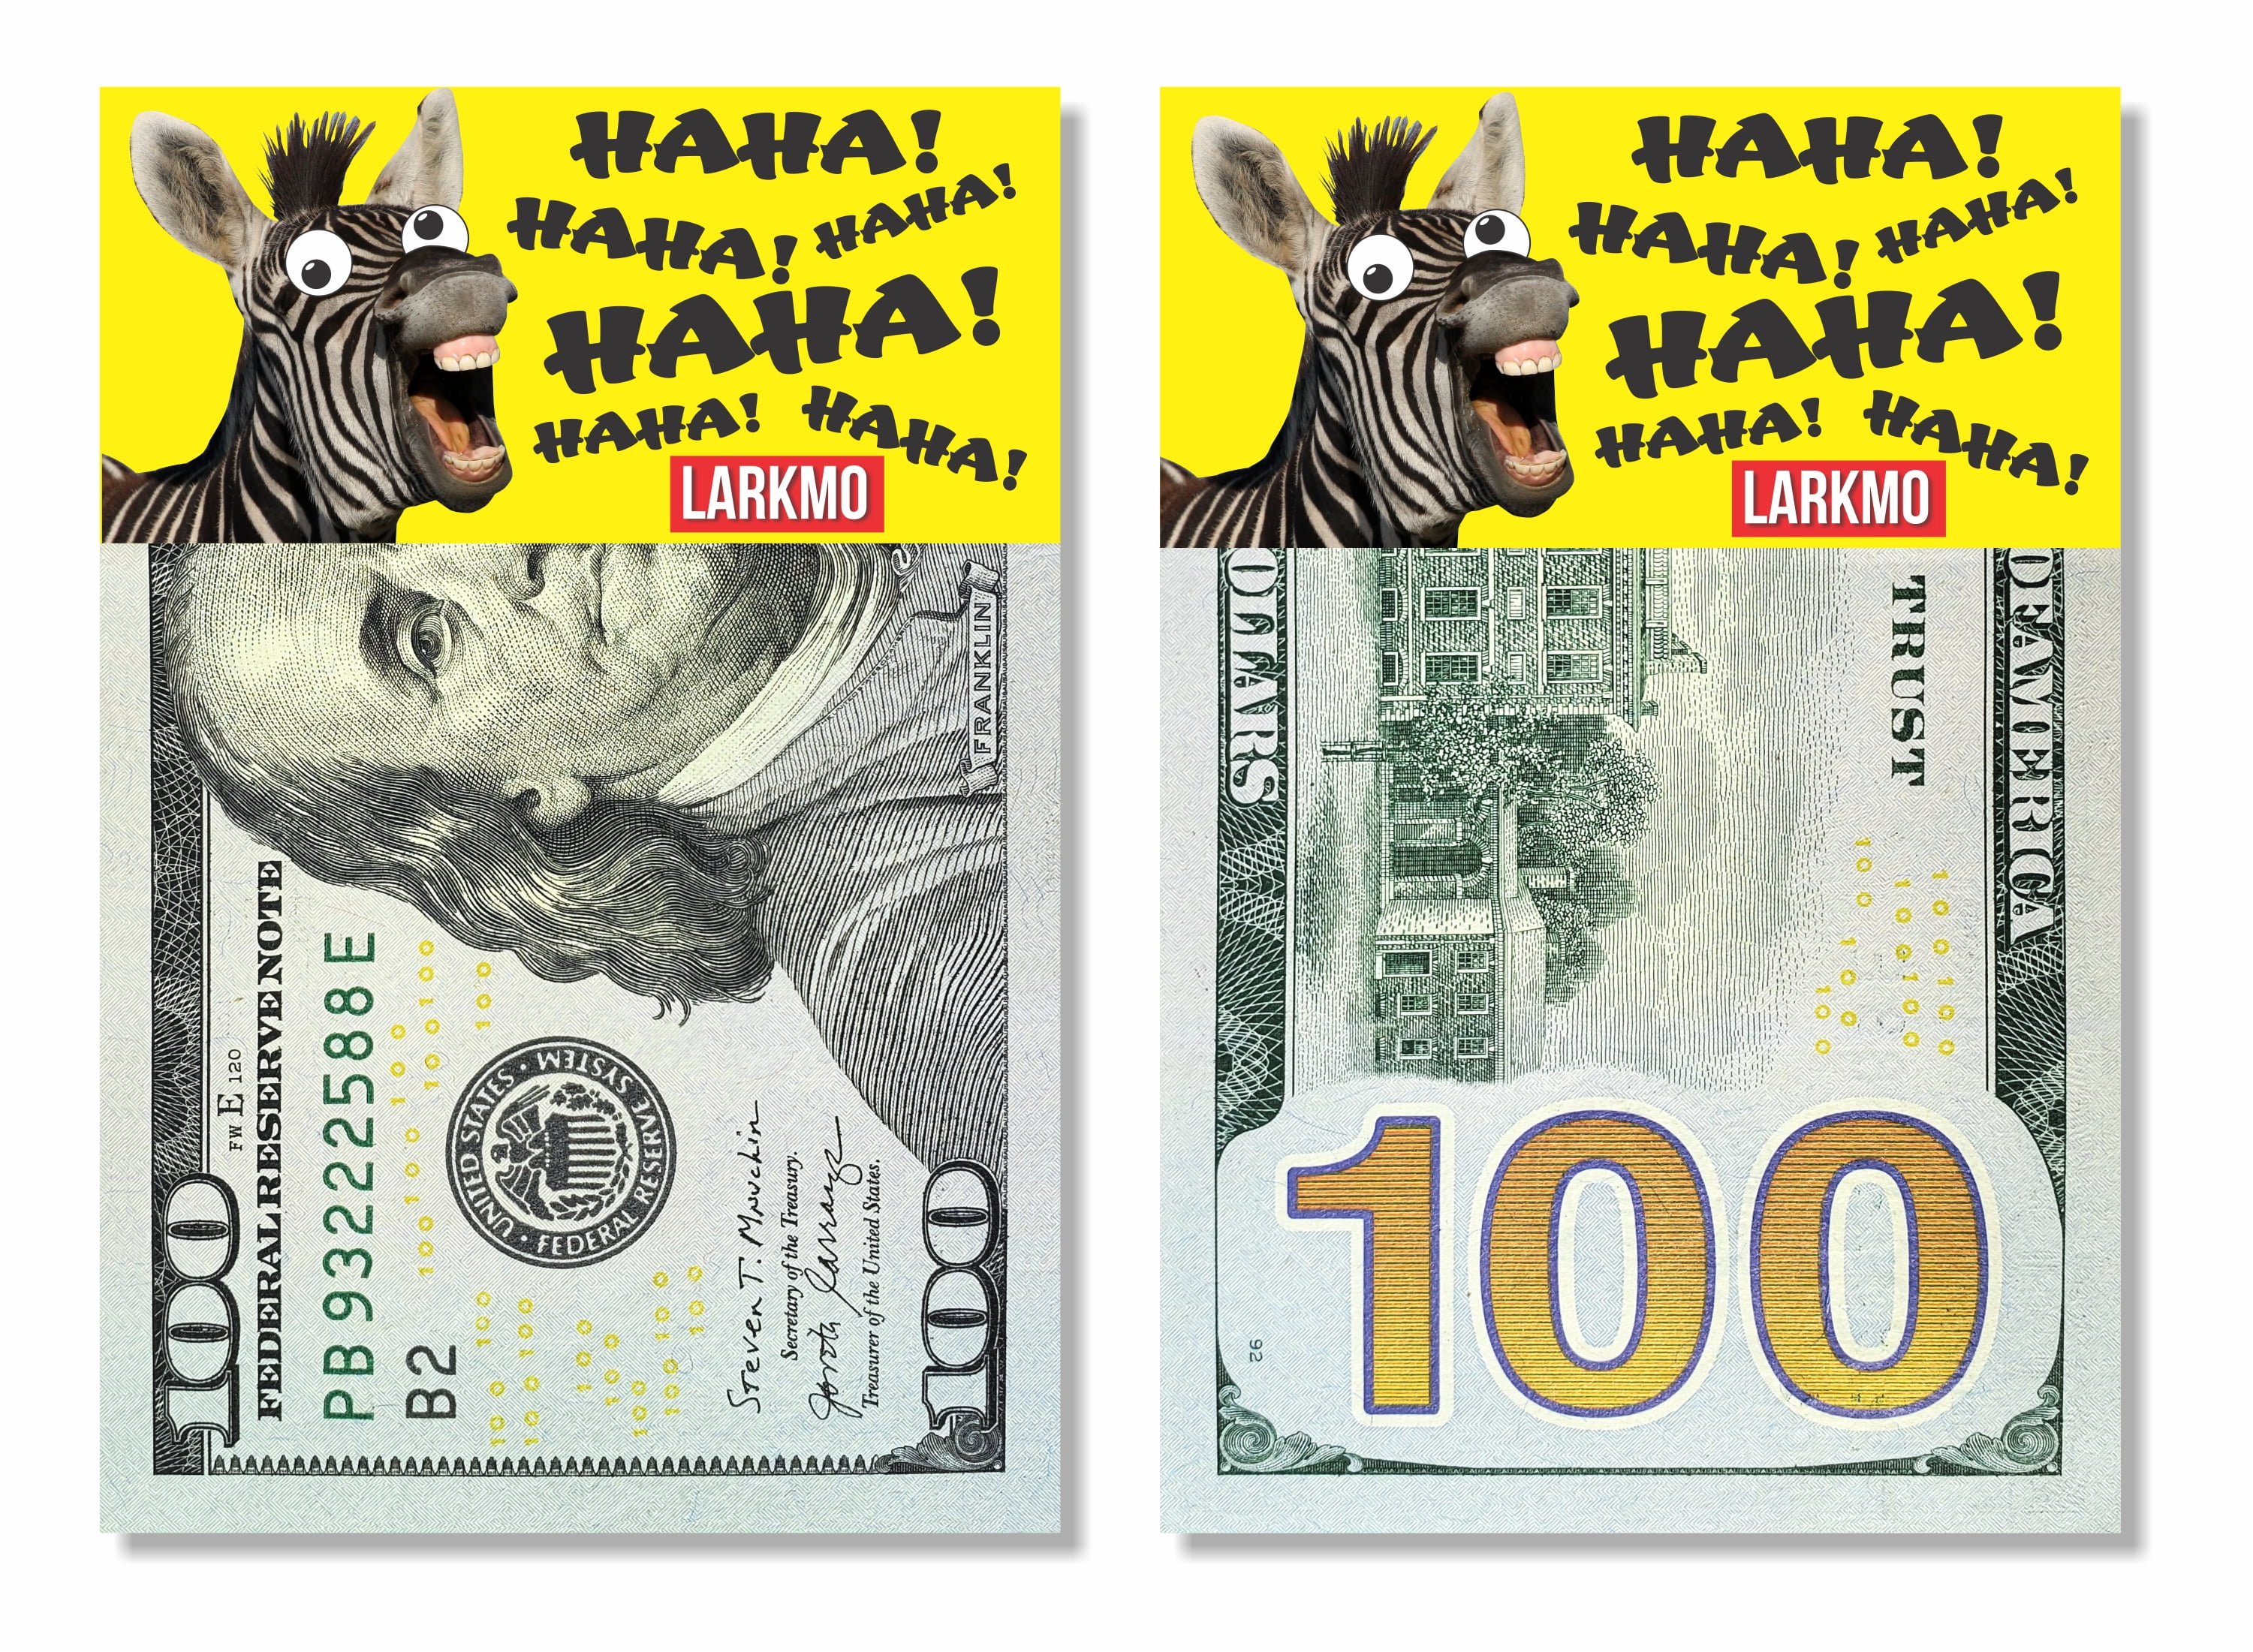 Funny Gag Joke ~ looks real! ZILLION Dollar Novelty Money Bills 100 